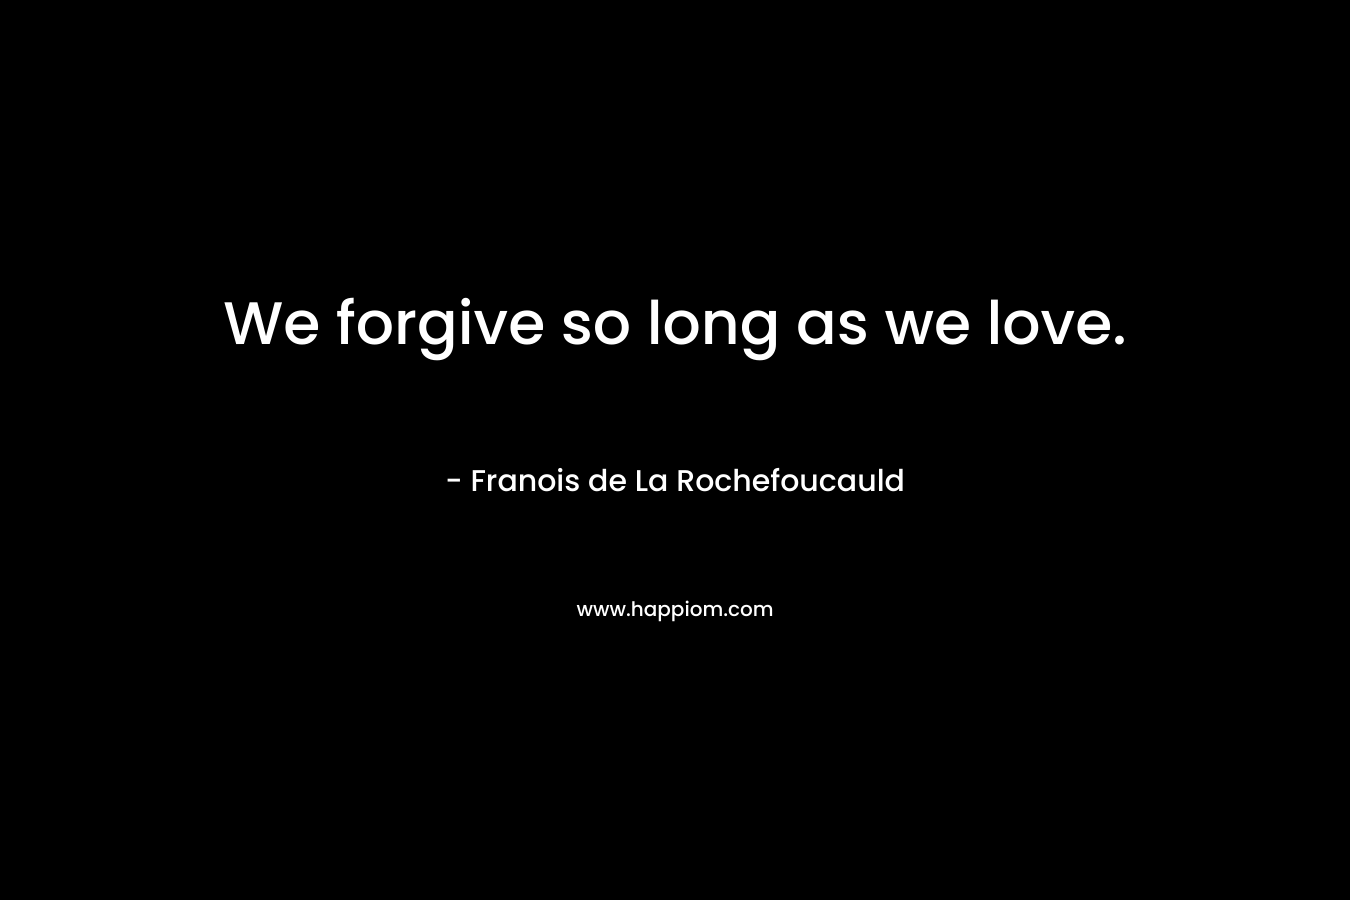 We forgive so long as we love.